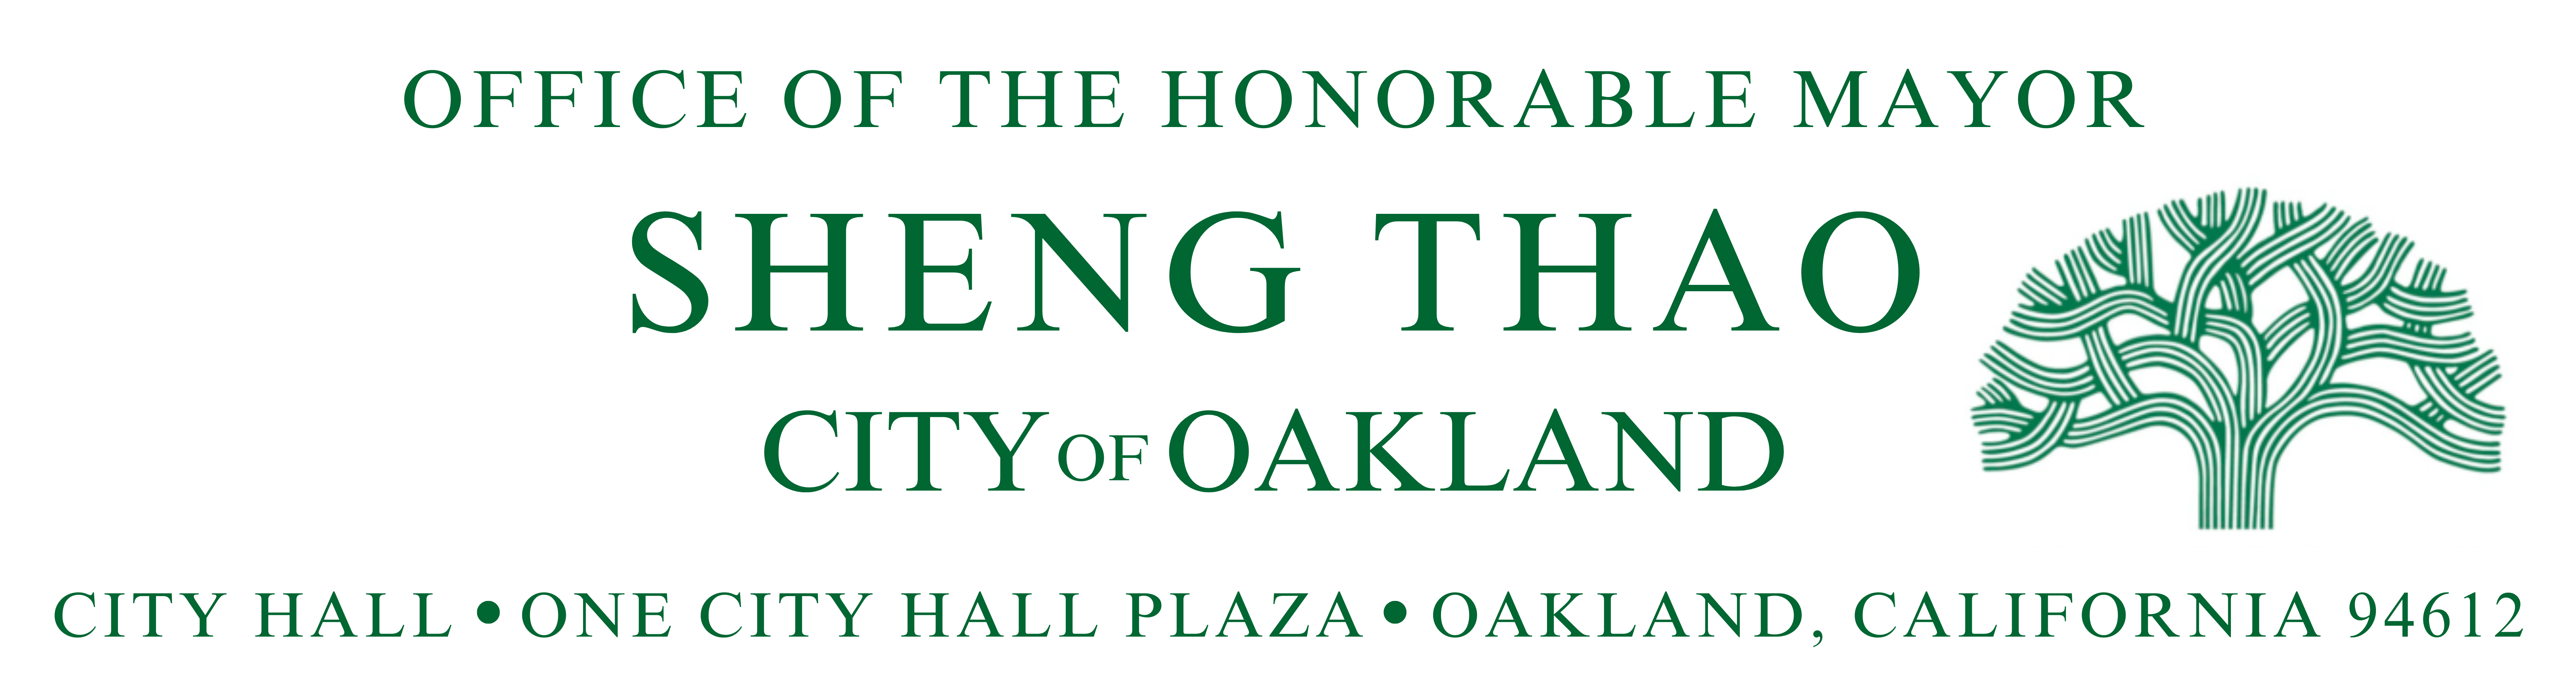 OFFICE OF THE HONORABLE MAYOR SHENG THAO CITYOF OAKLAND CITY HALL • ONE CITY HALL PLAZA • OAKLAND, CALIFORNIA 94612